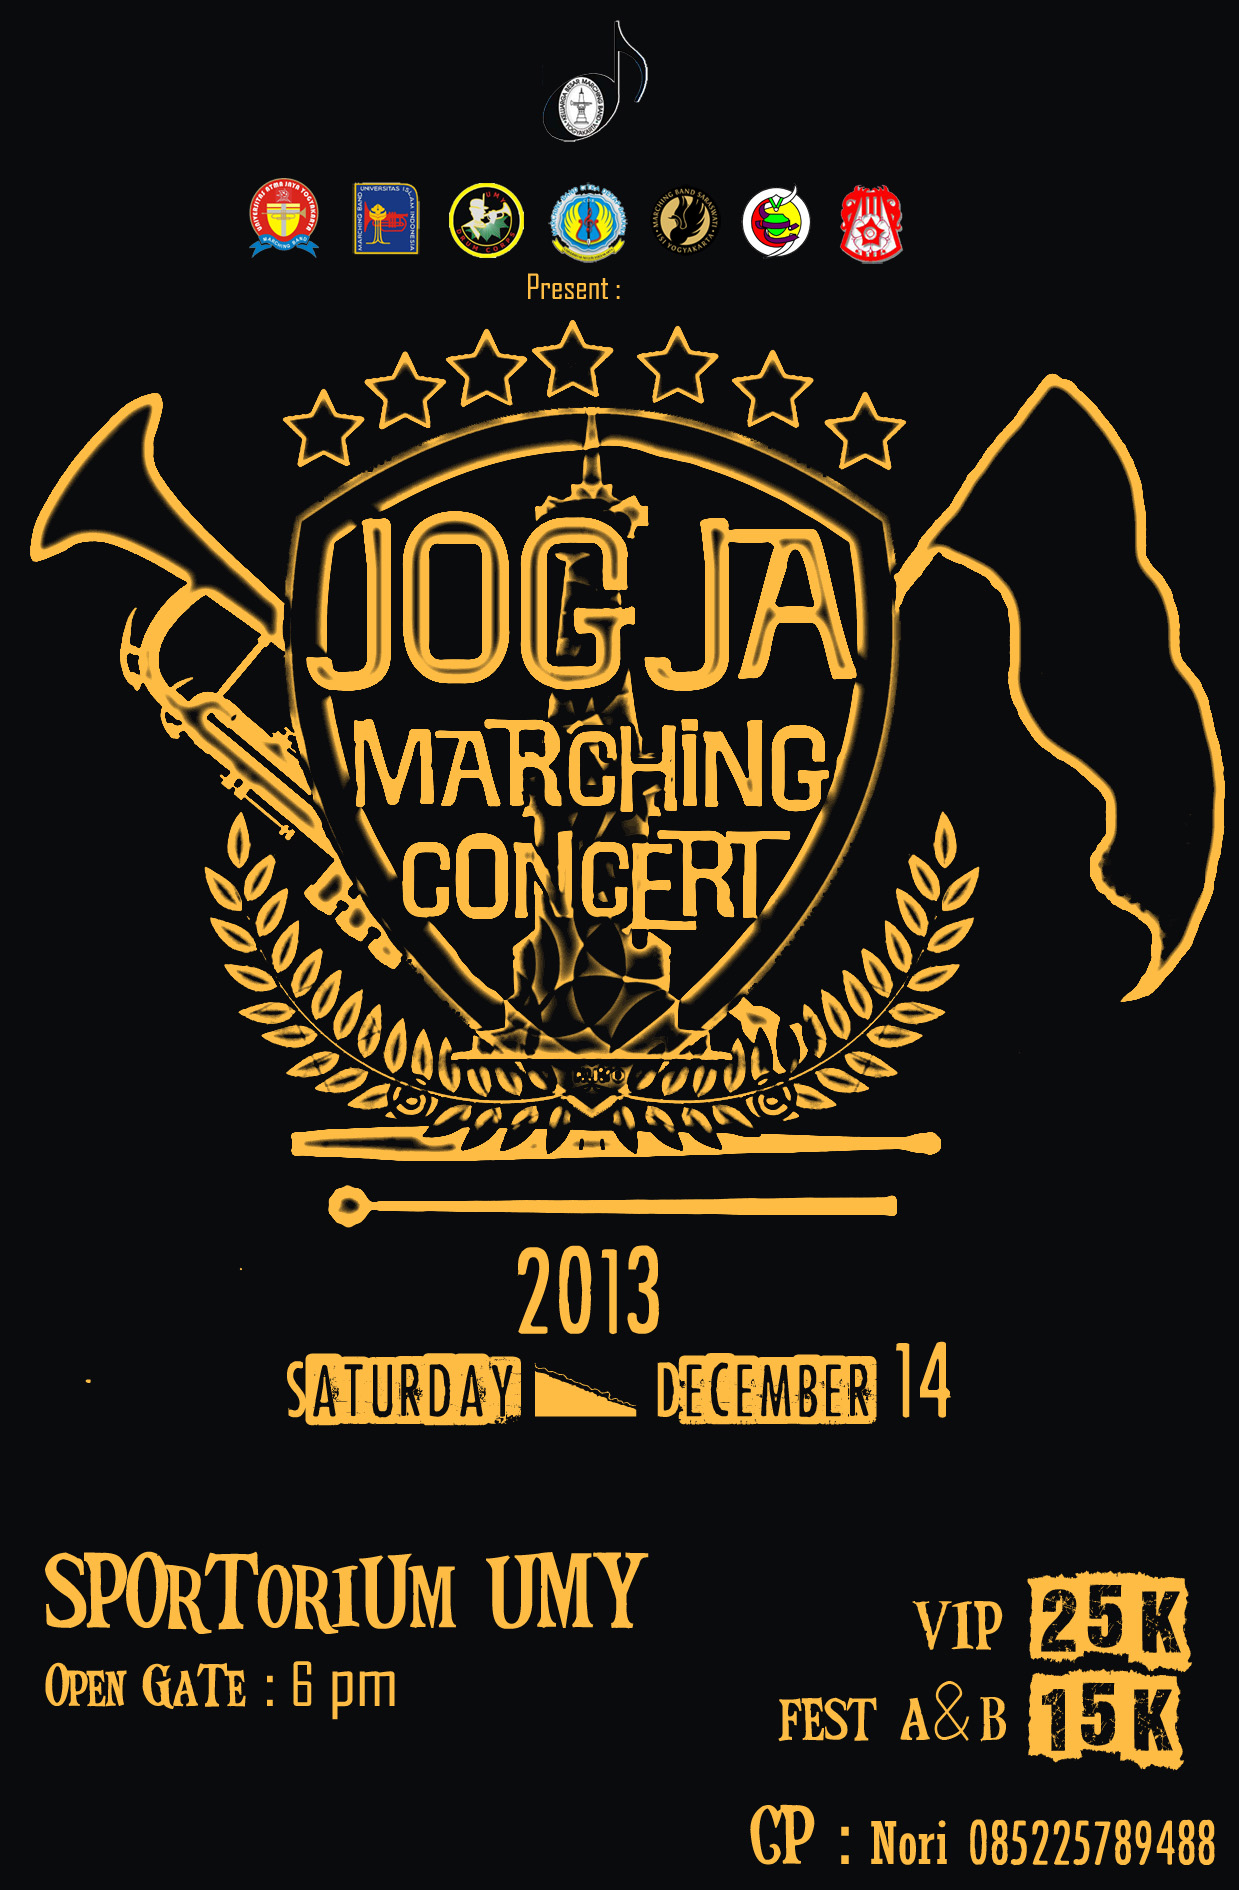 Jogja Marching Concert 2013 Konser Pamitnya Marching Band